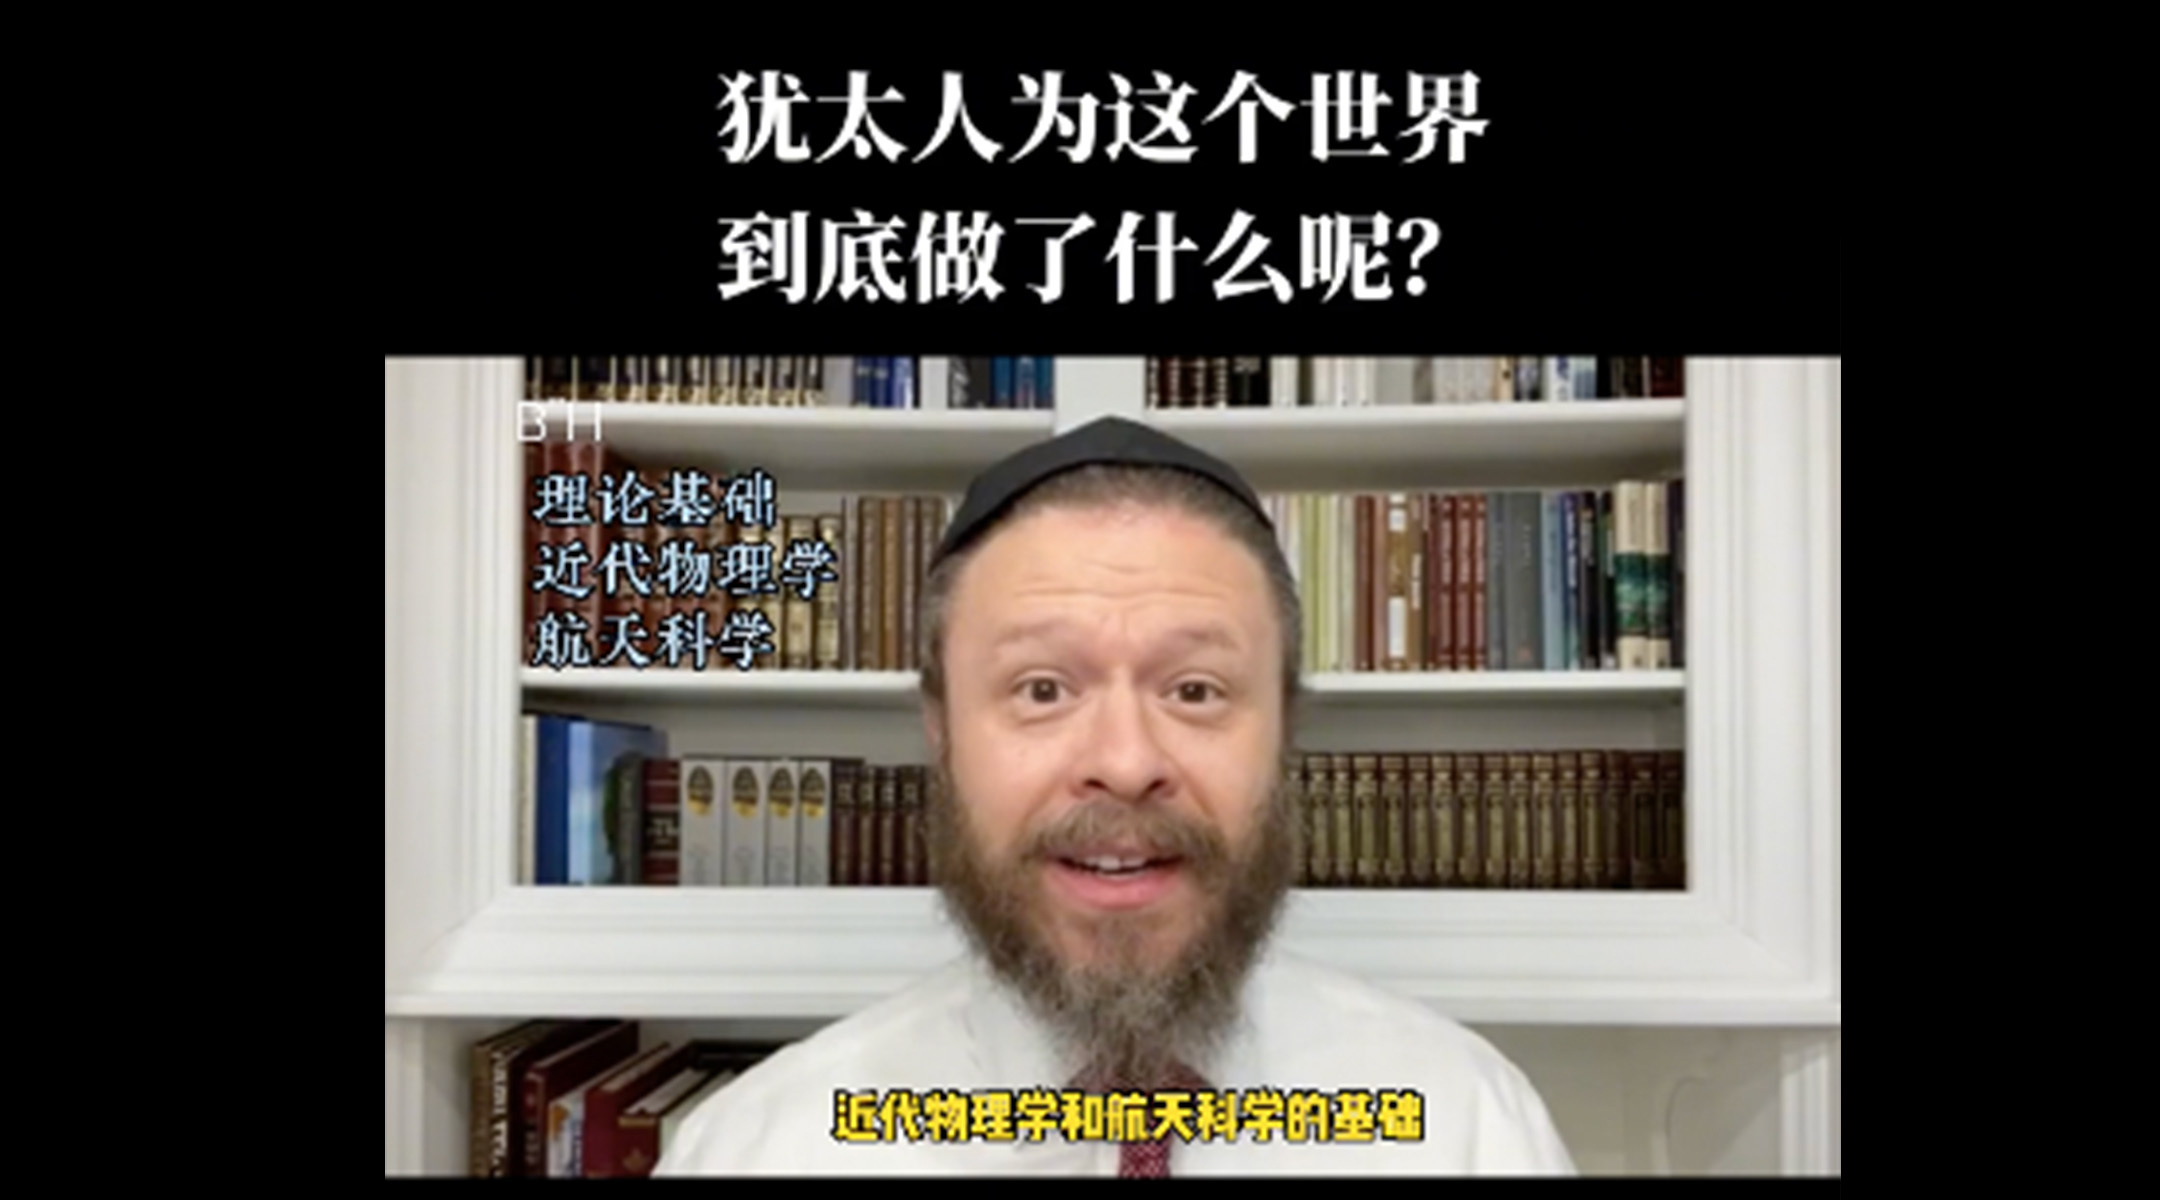 Fighting Jewish stereotypes in China TikTok for this rabbi